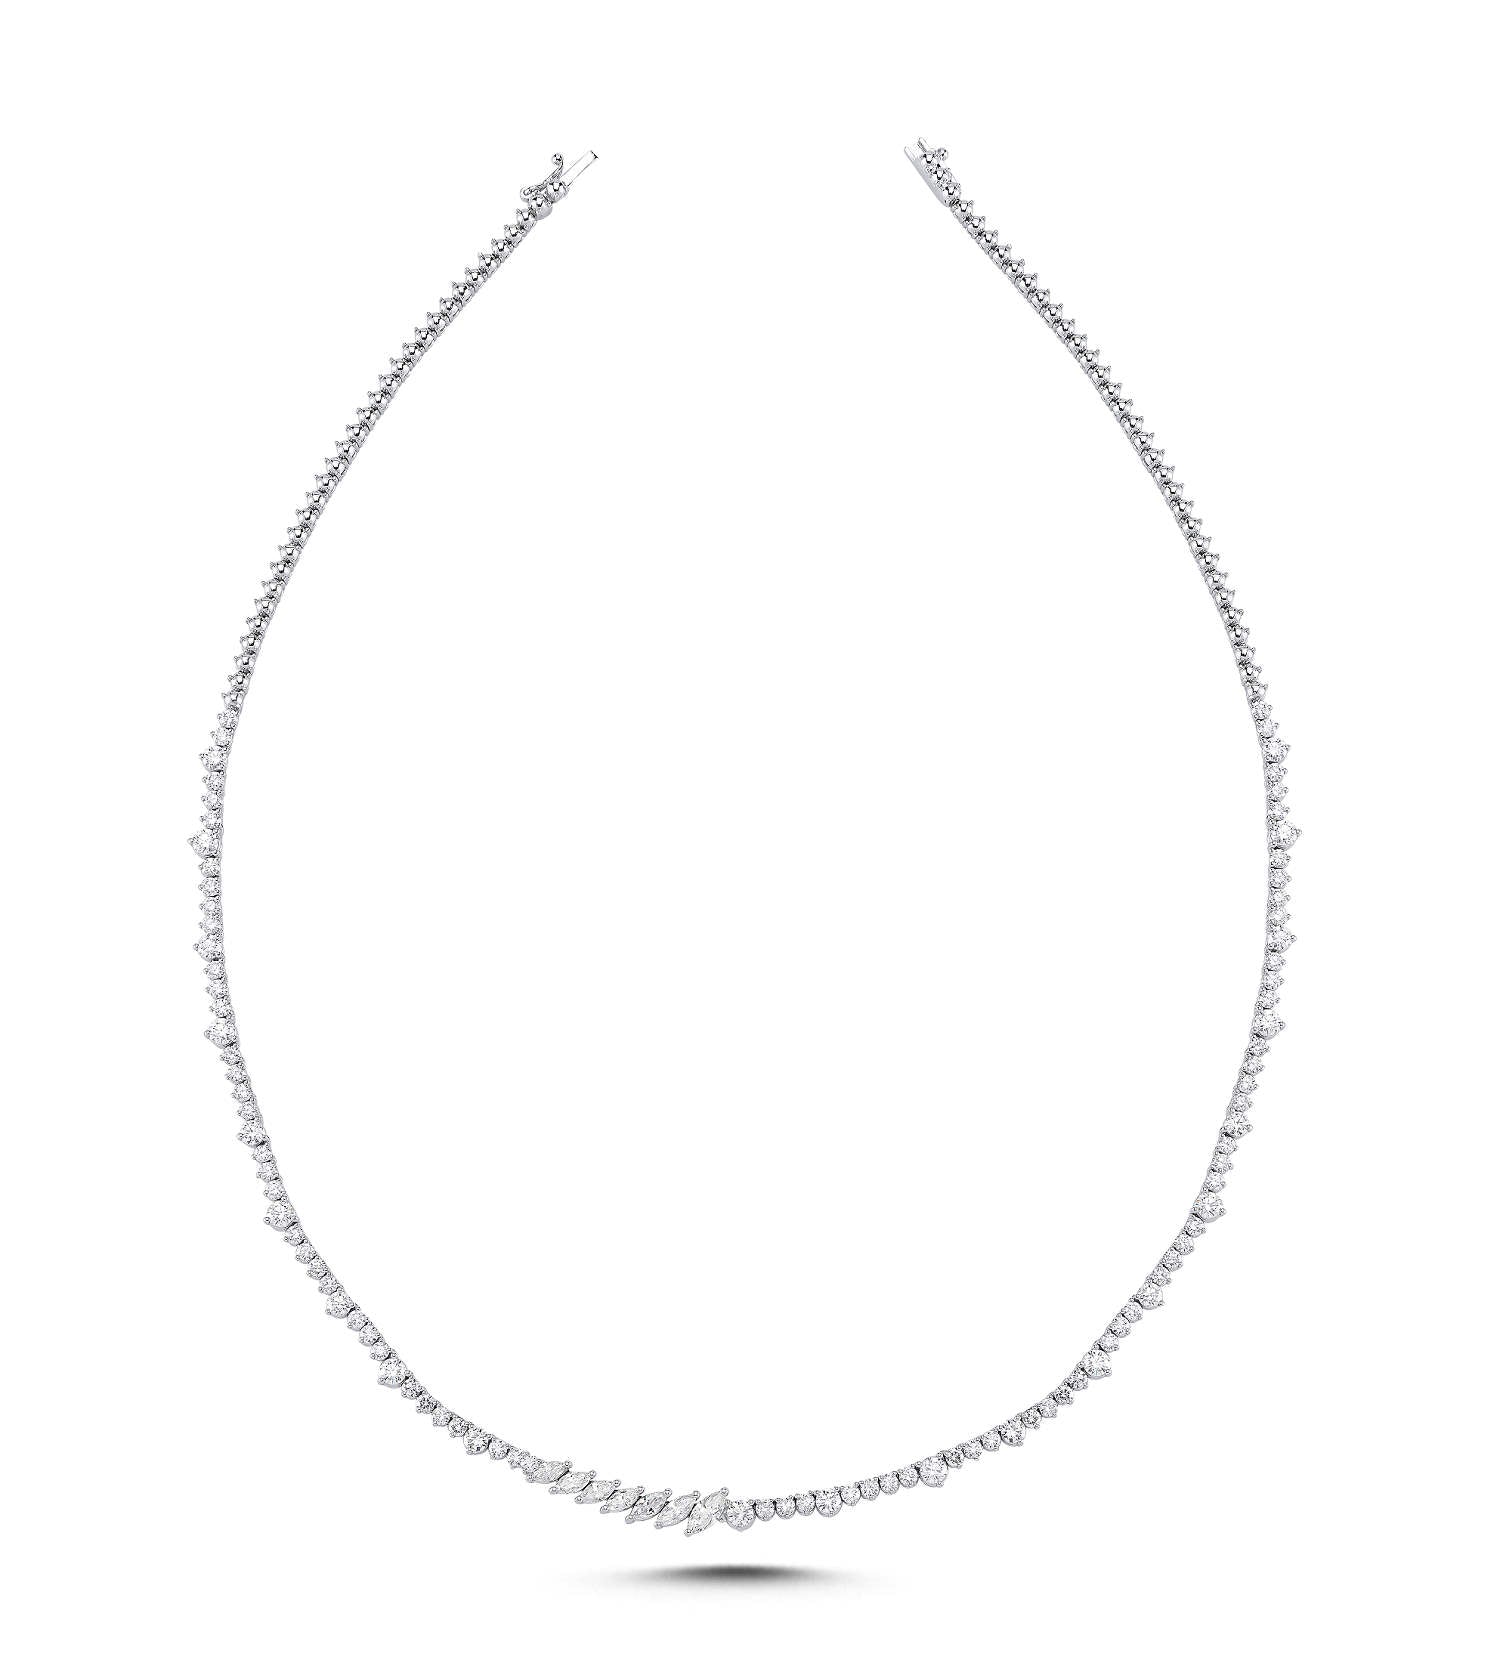 The Soma Lab Diamond Necklace